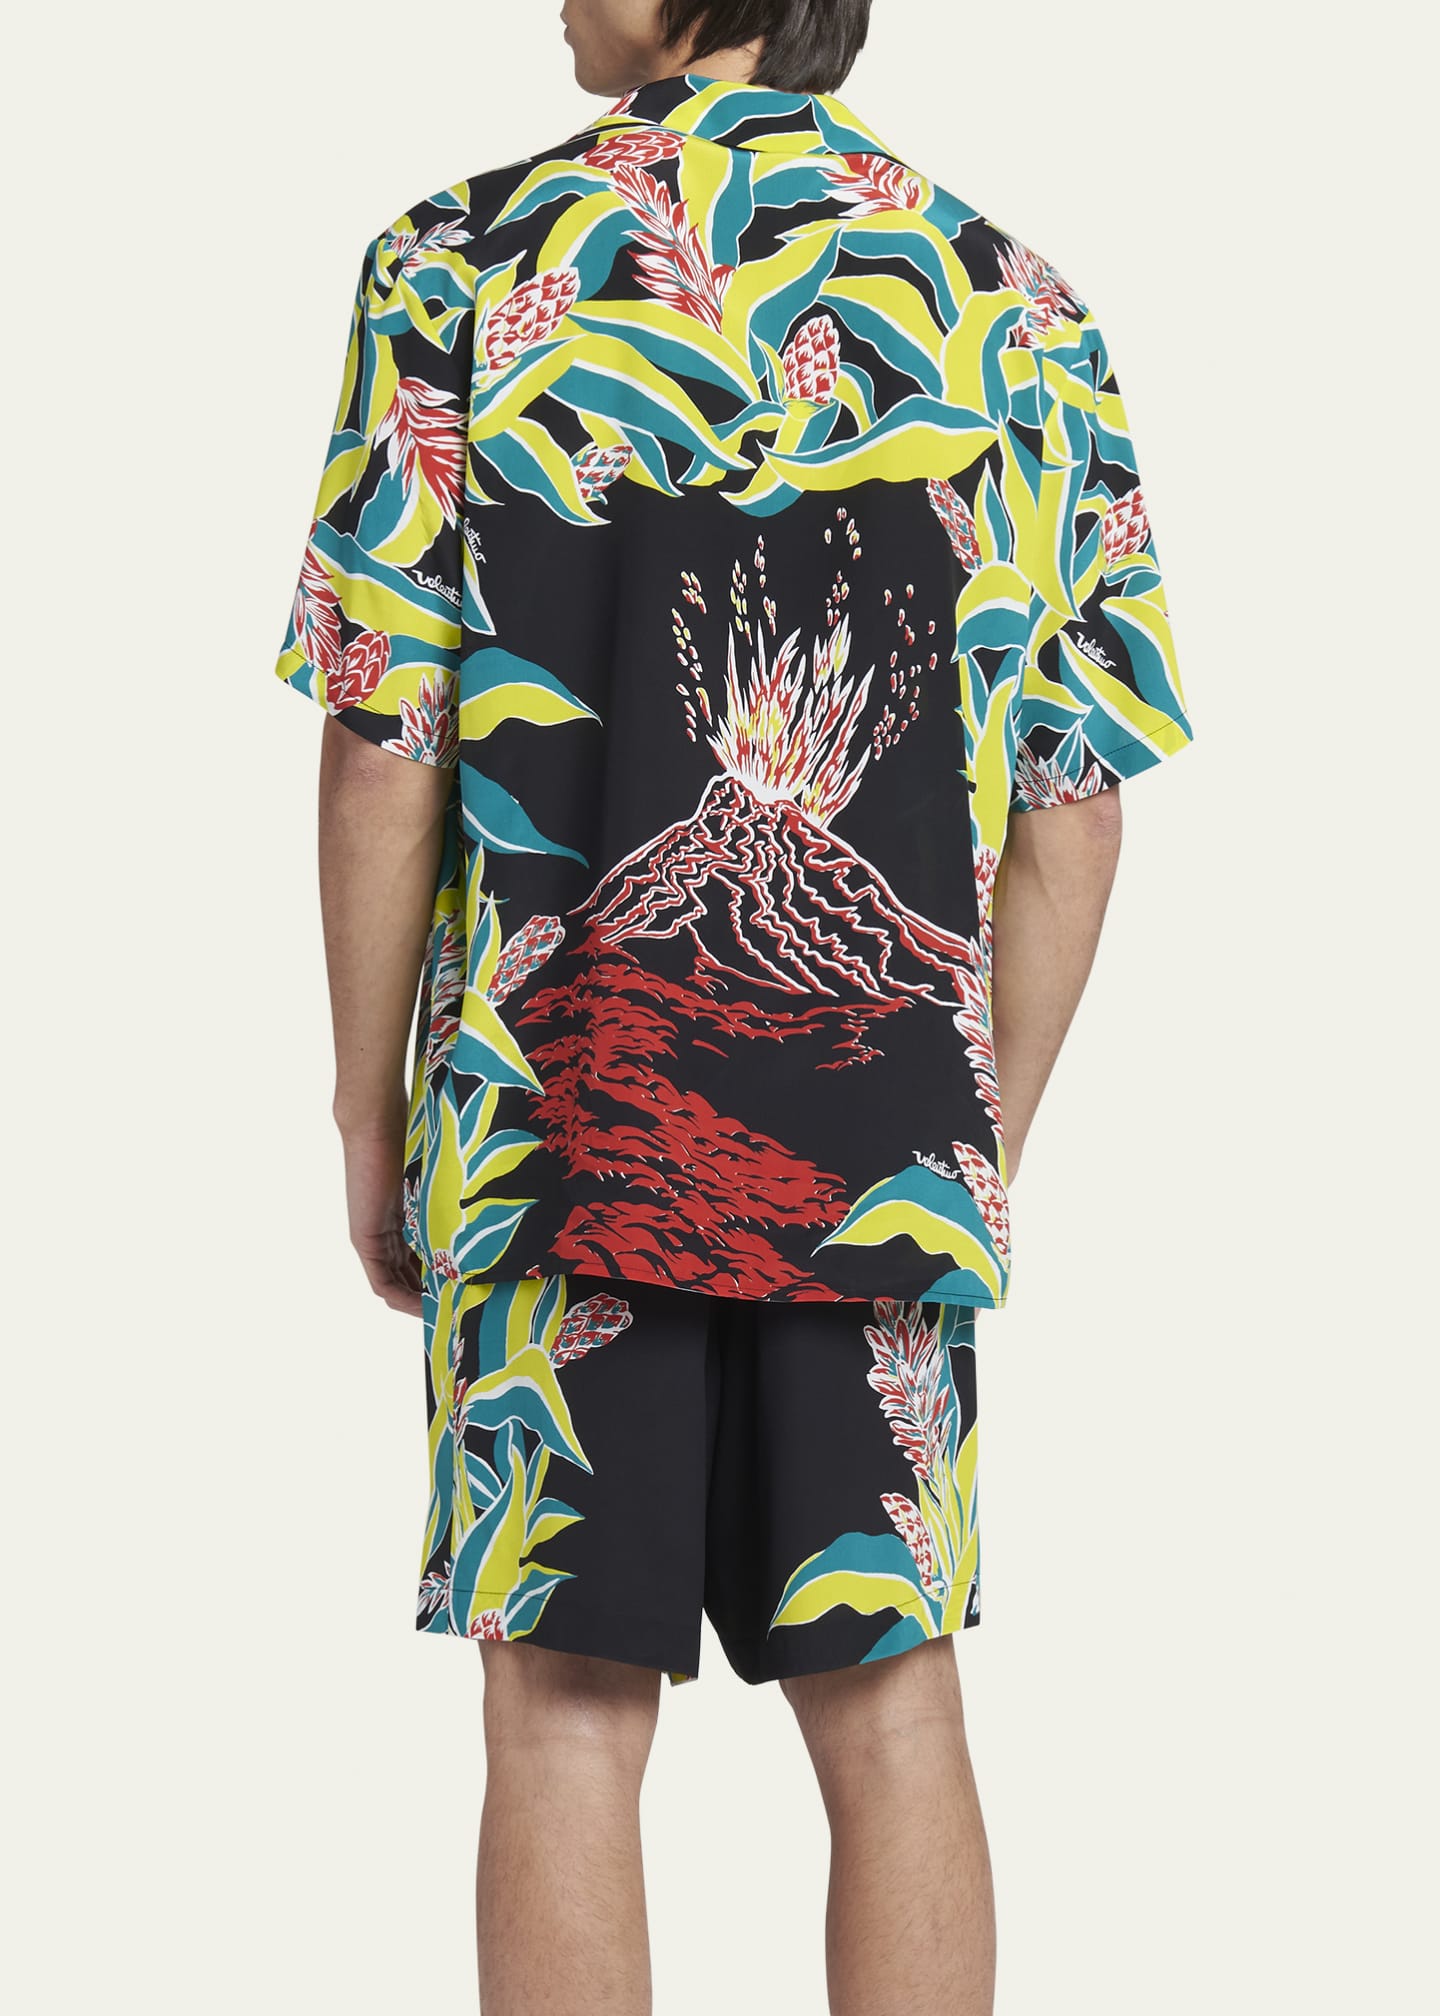 binde Madison fup Valentino Garavani Men's Sun Surf Volcano Placed-Print Camp Shirt -  Bergdorf Goodman